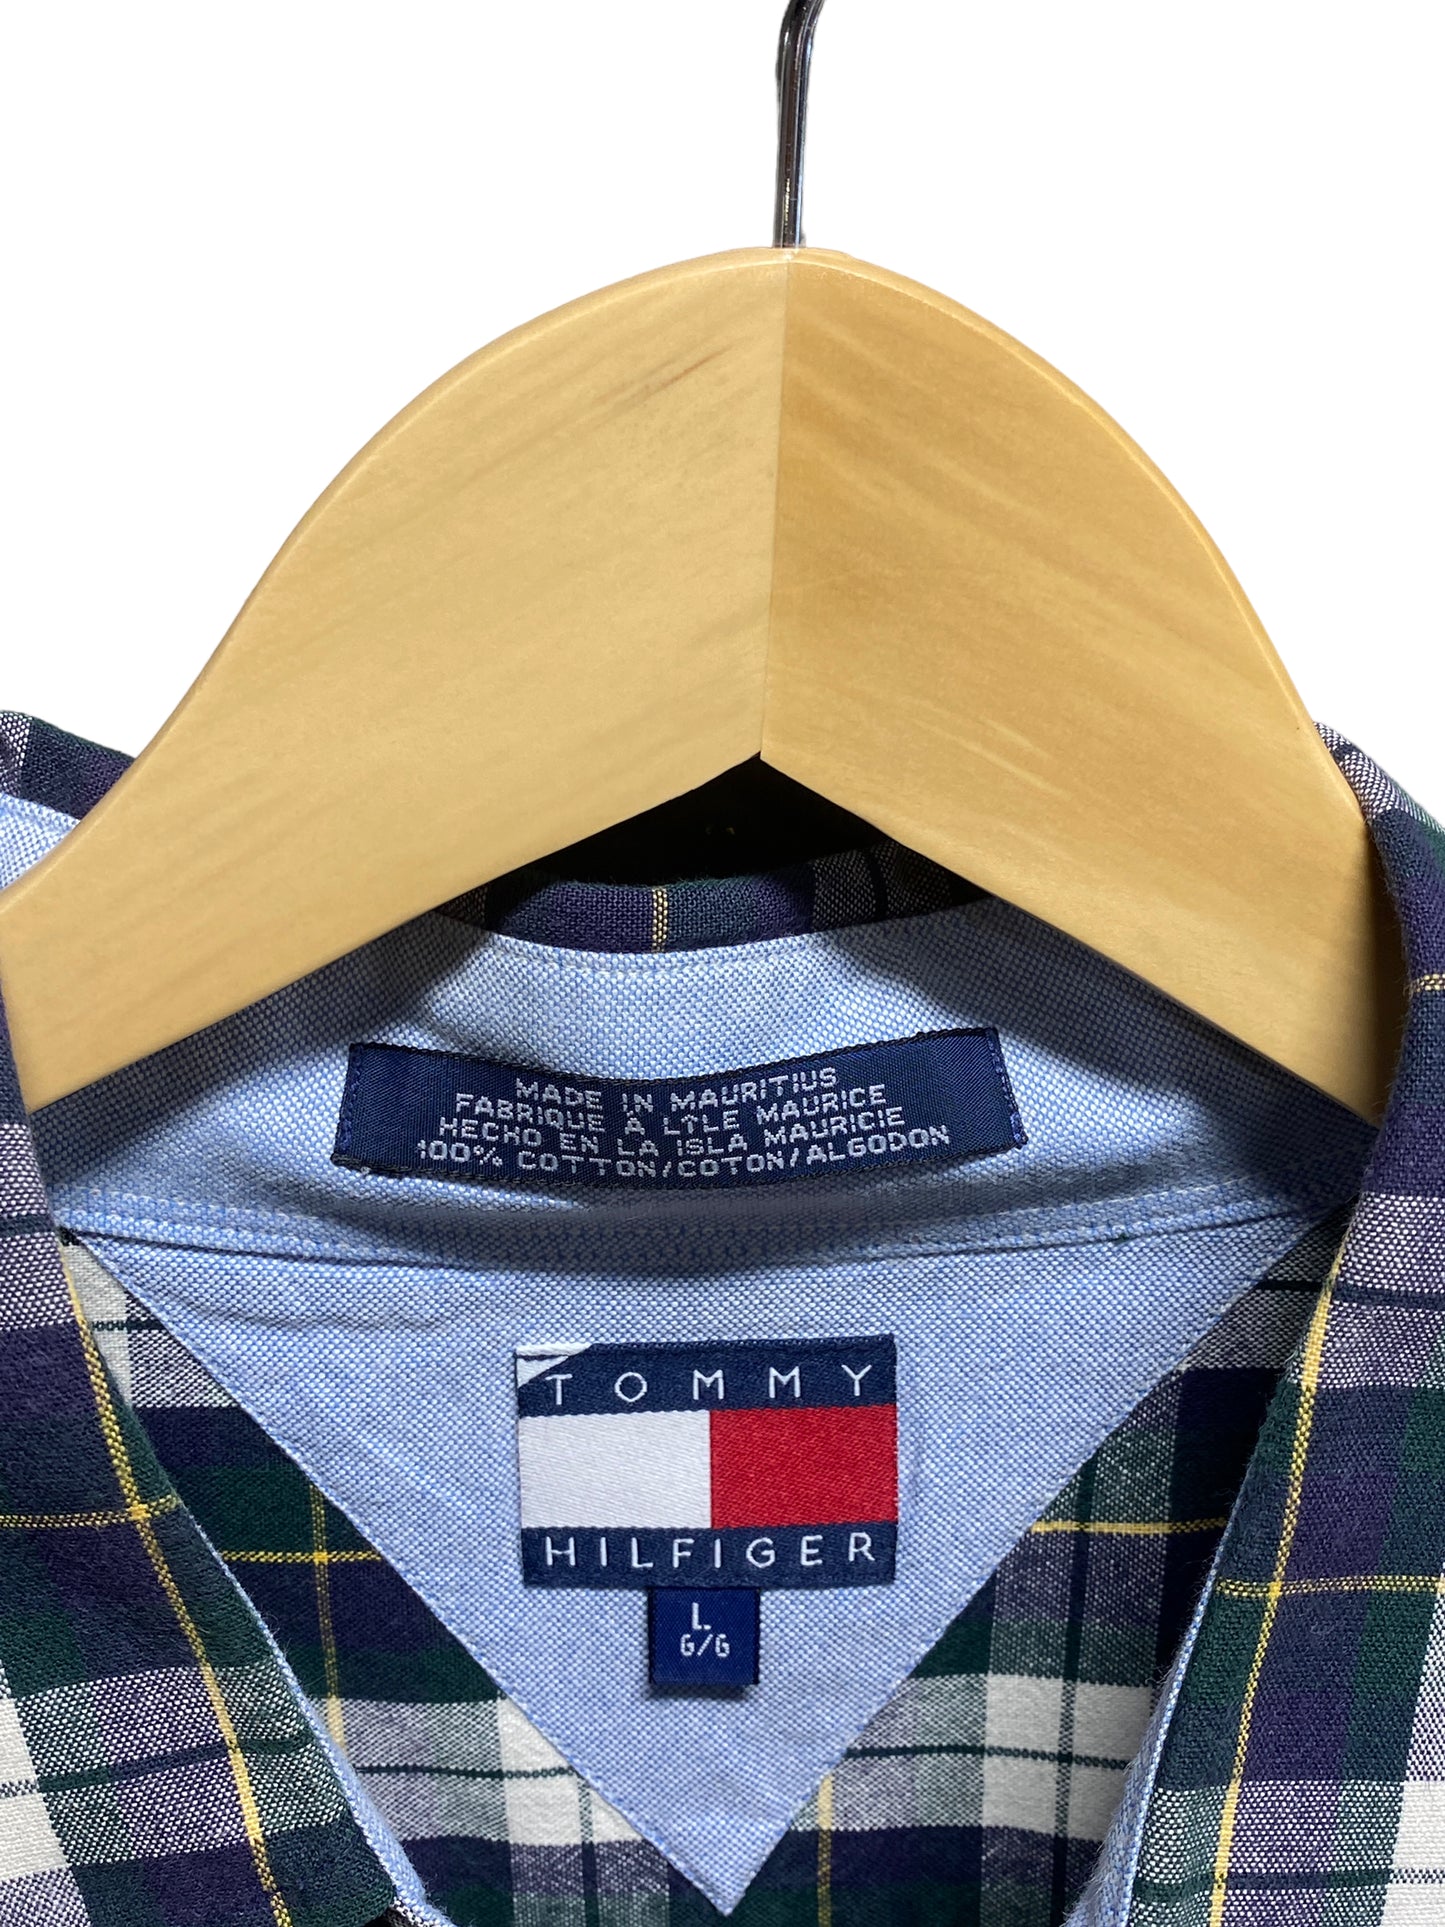 Vintage Tommy Hilfiger Plaid Button Up Shirt Size Large